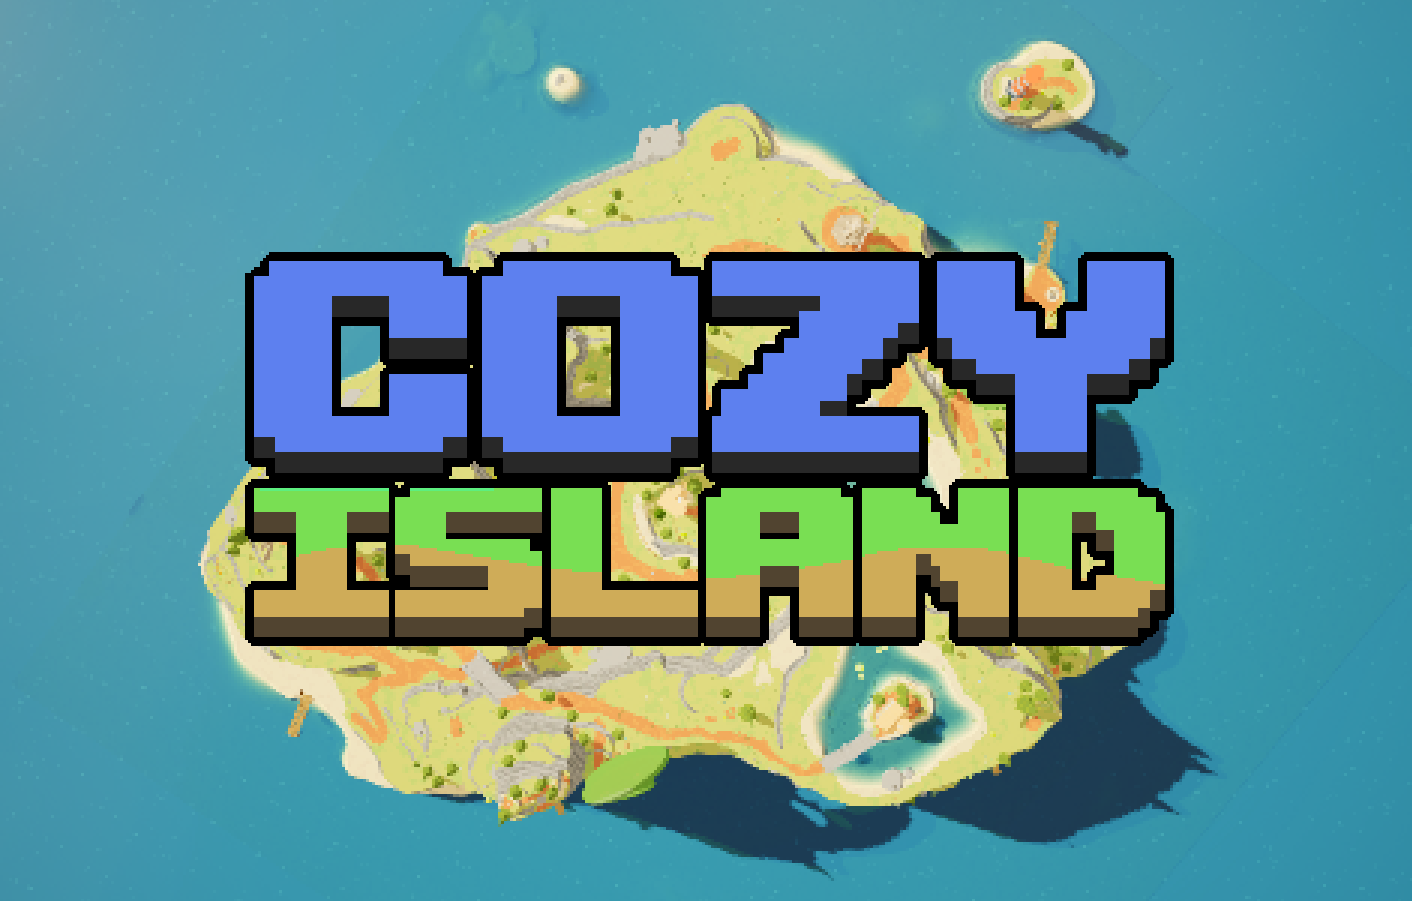 Cozy Island